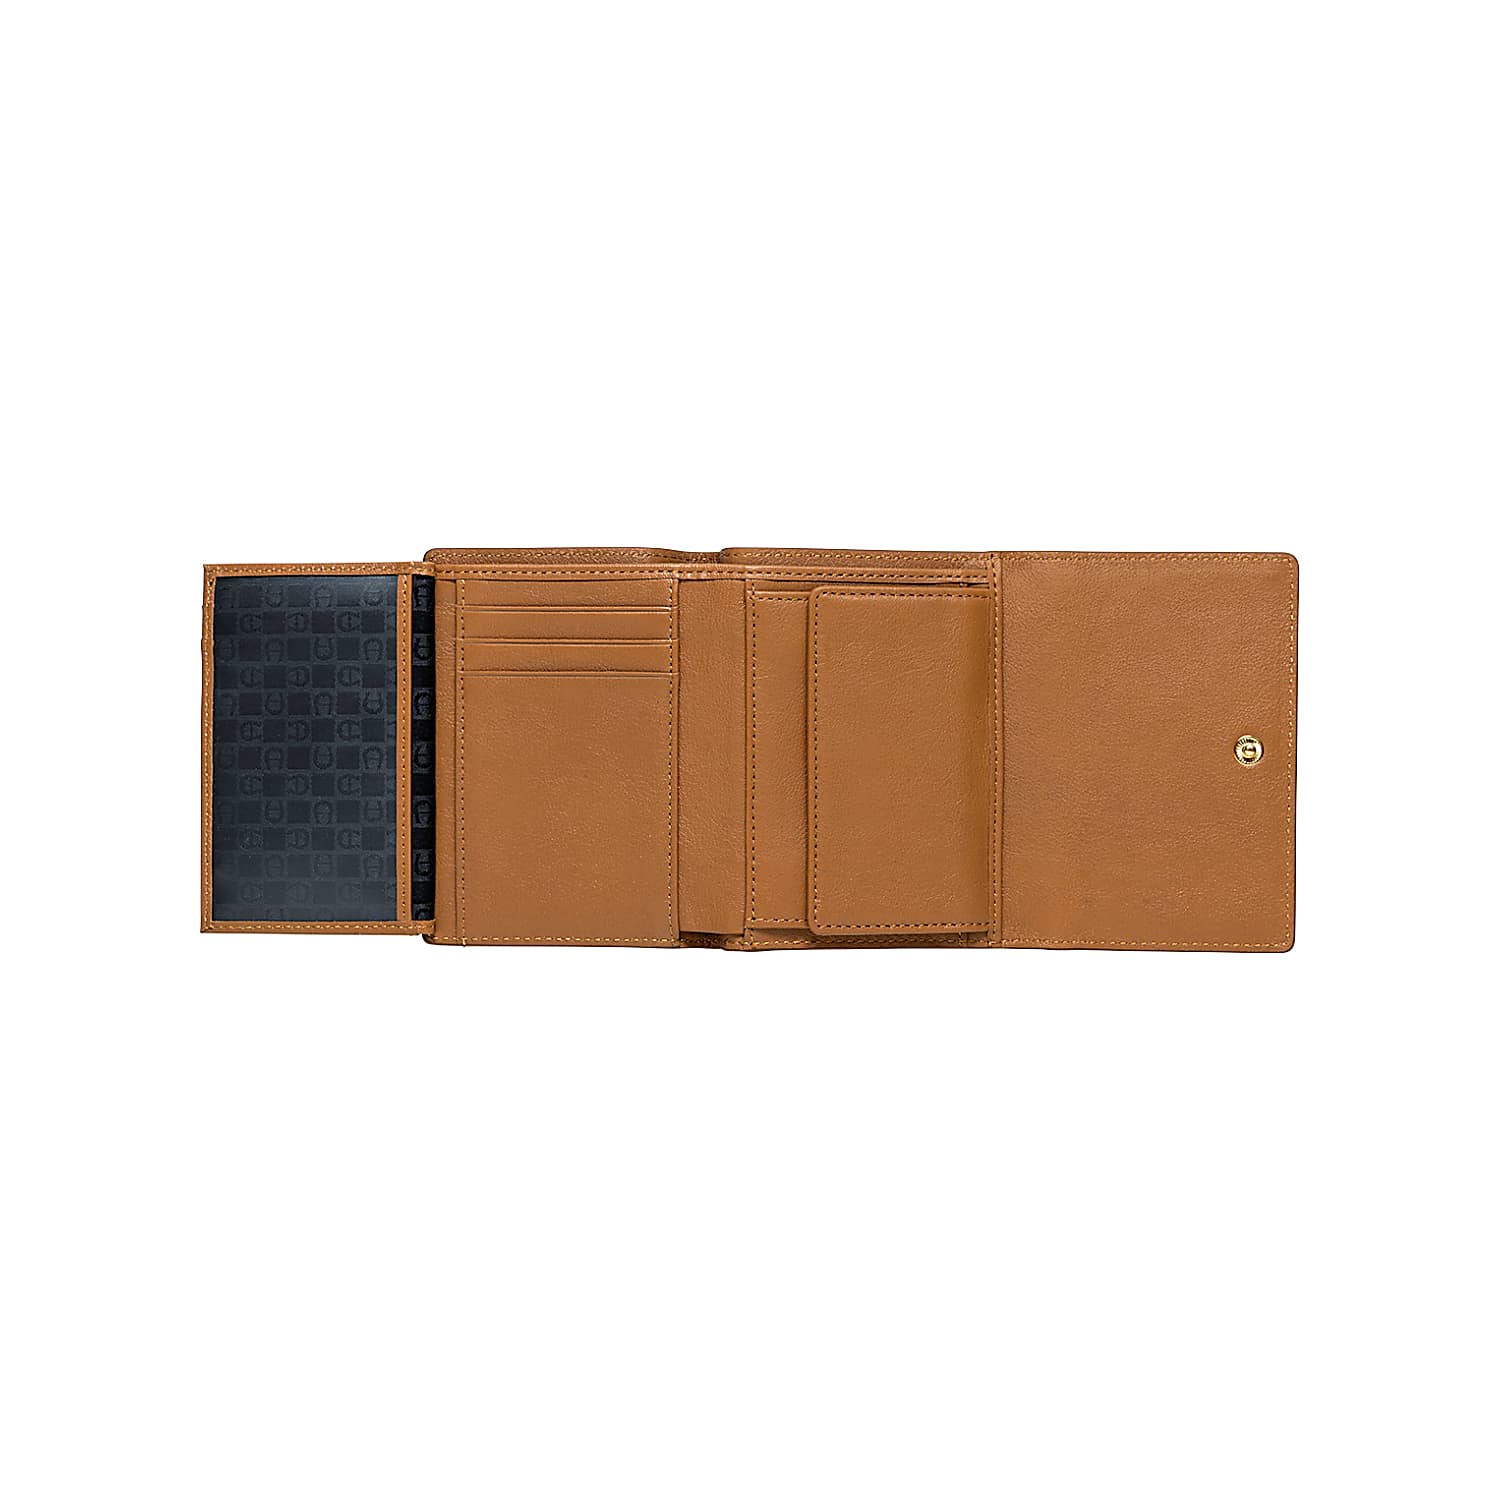 Giulietta combination wallet